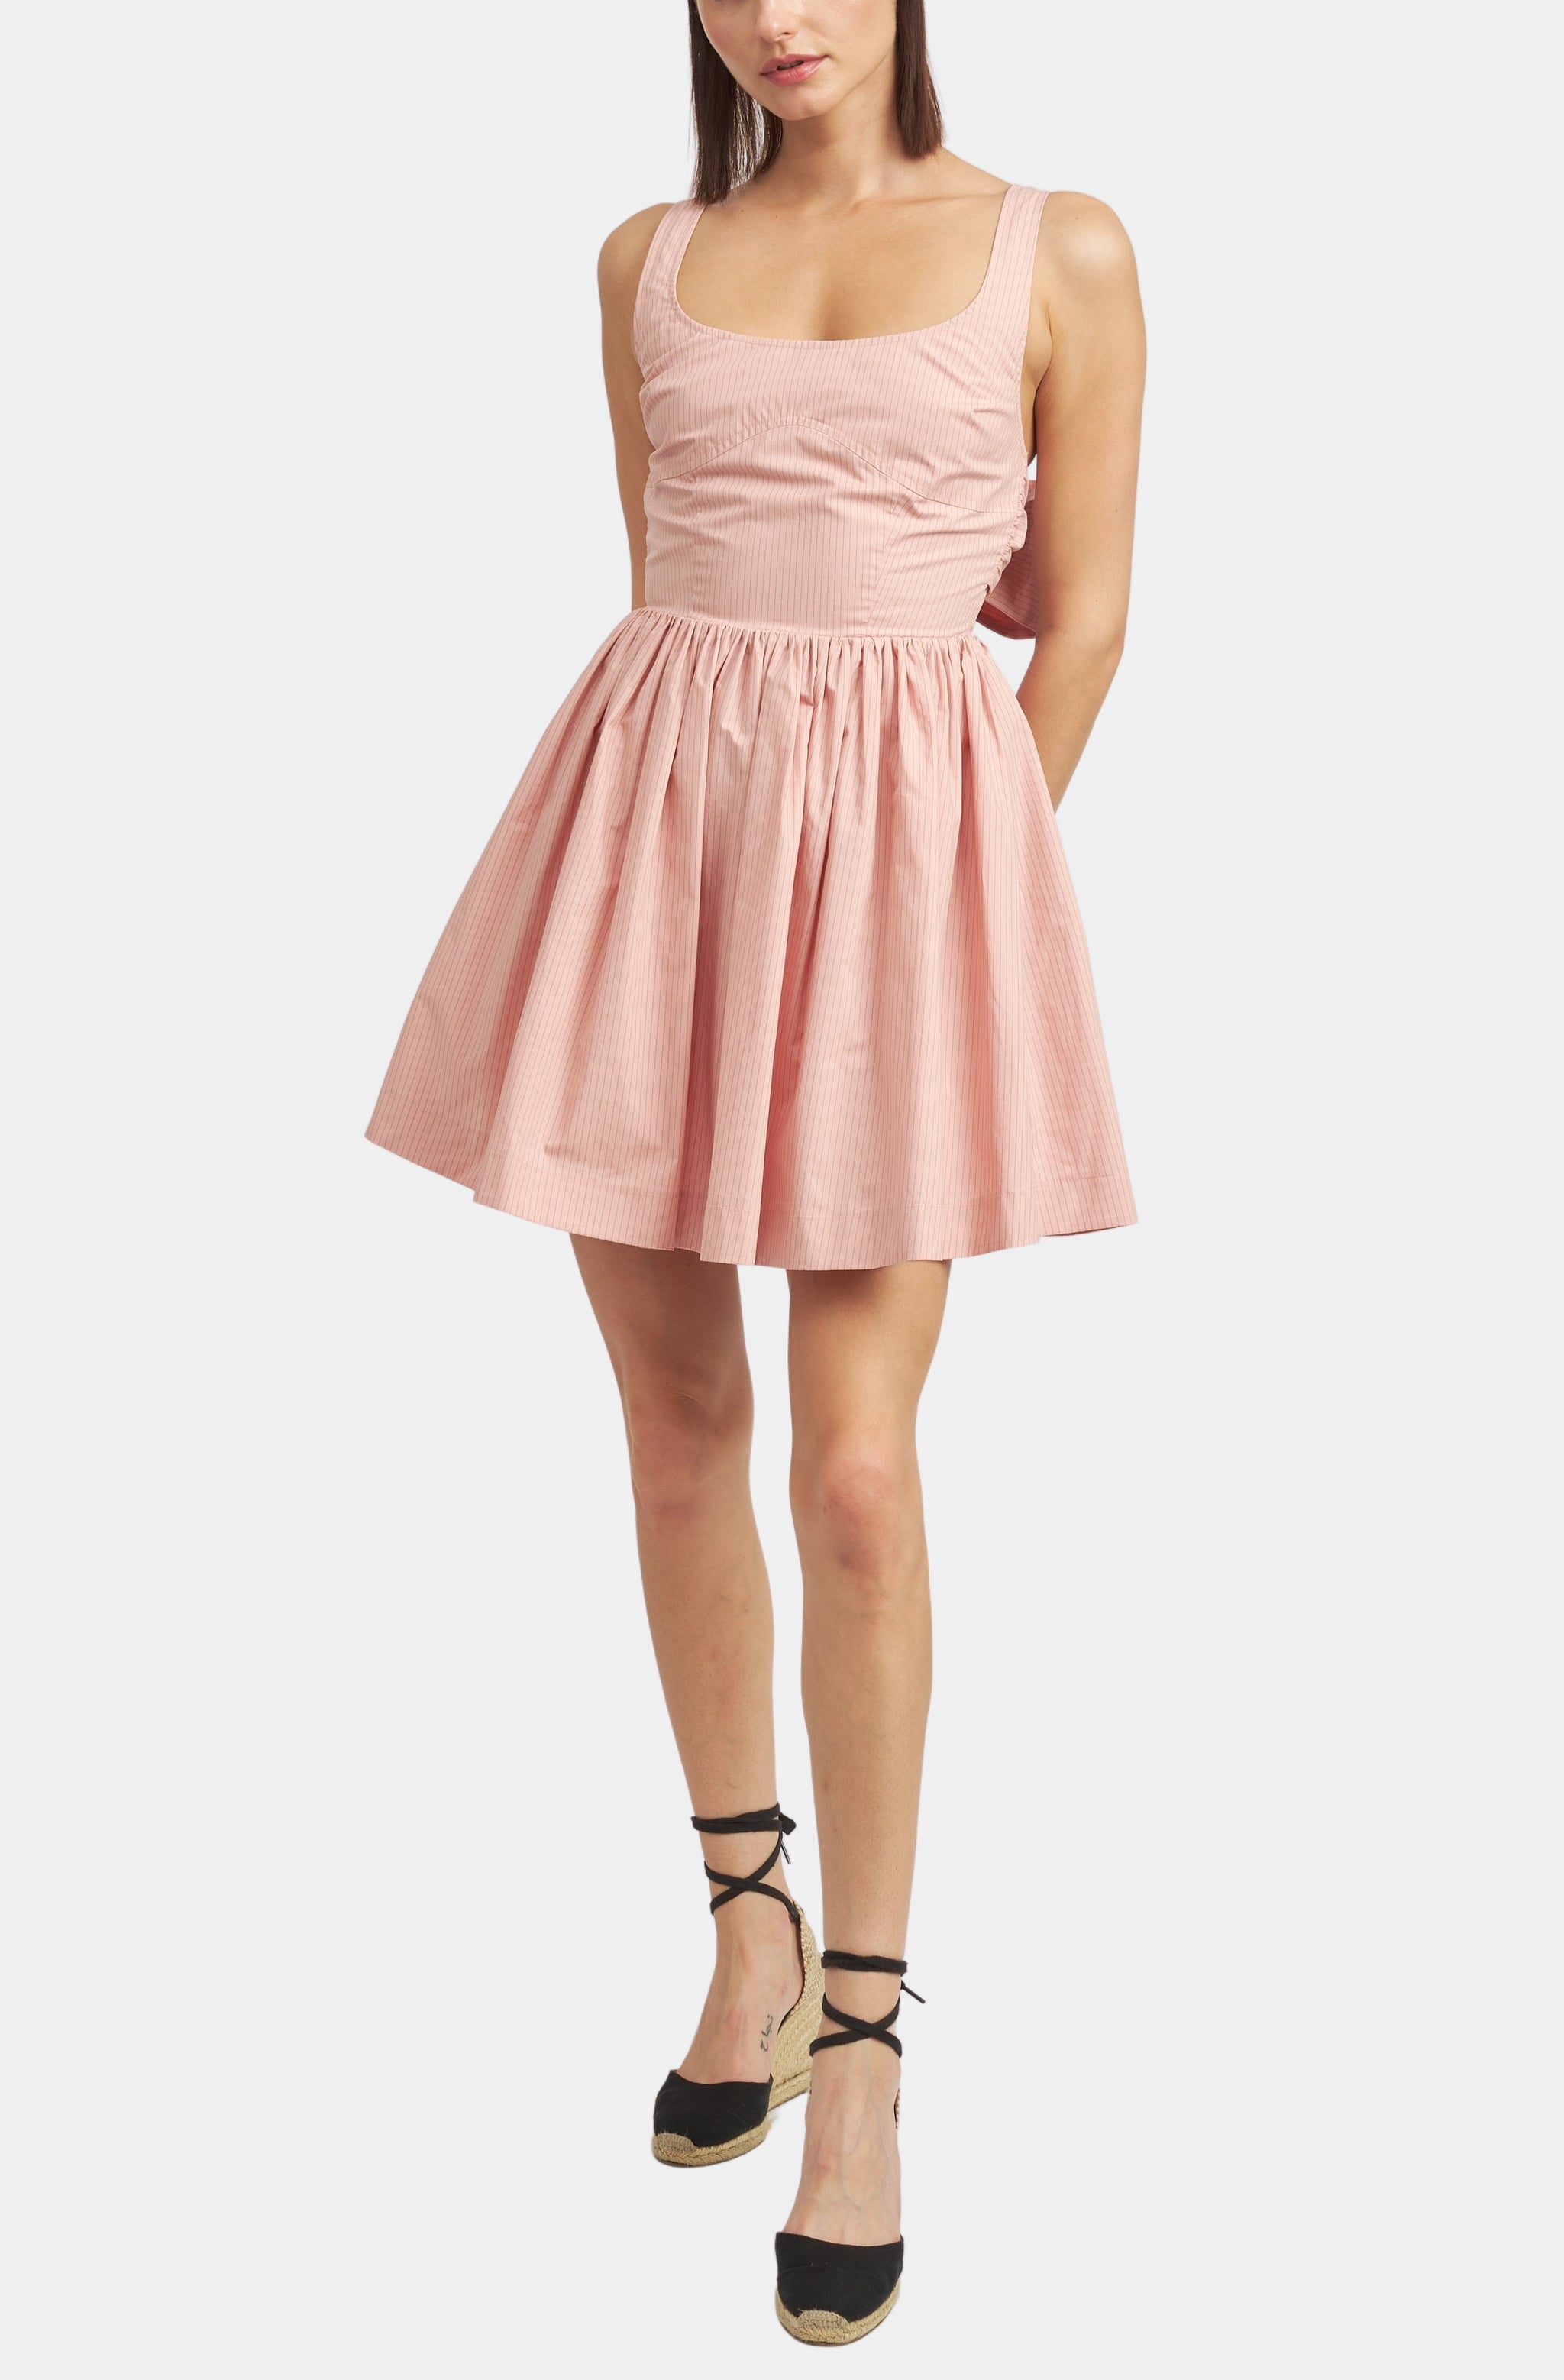 Eleanor Mini Dress